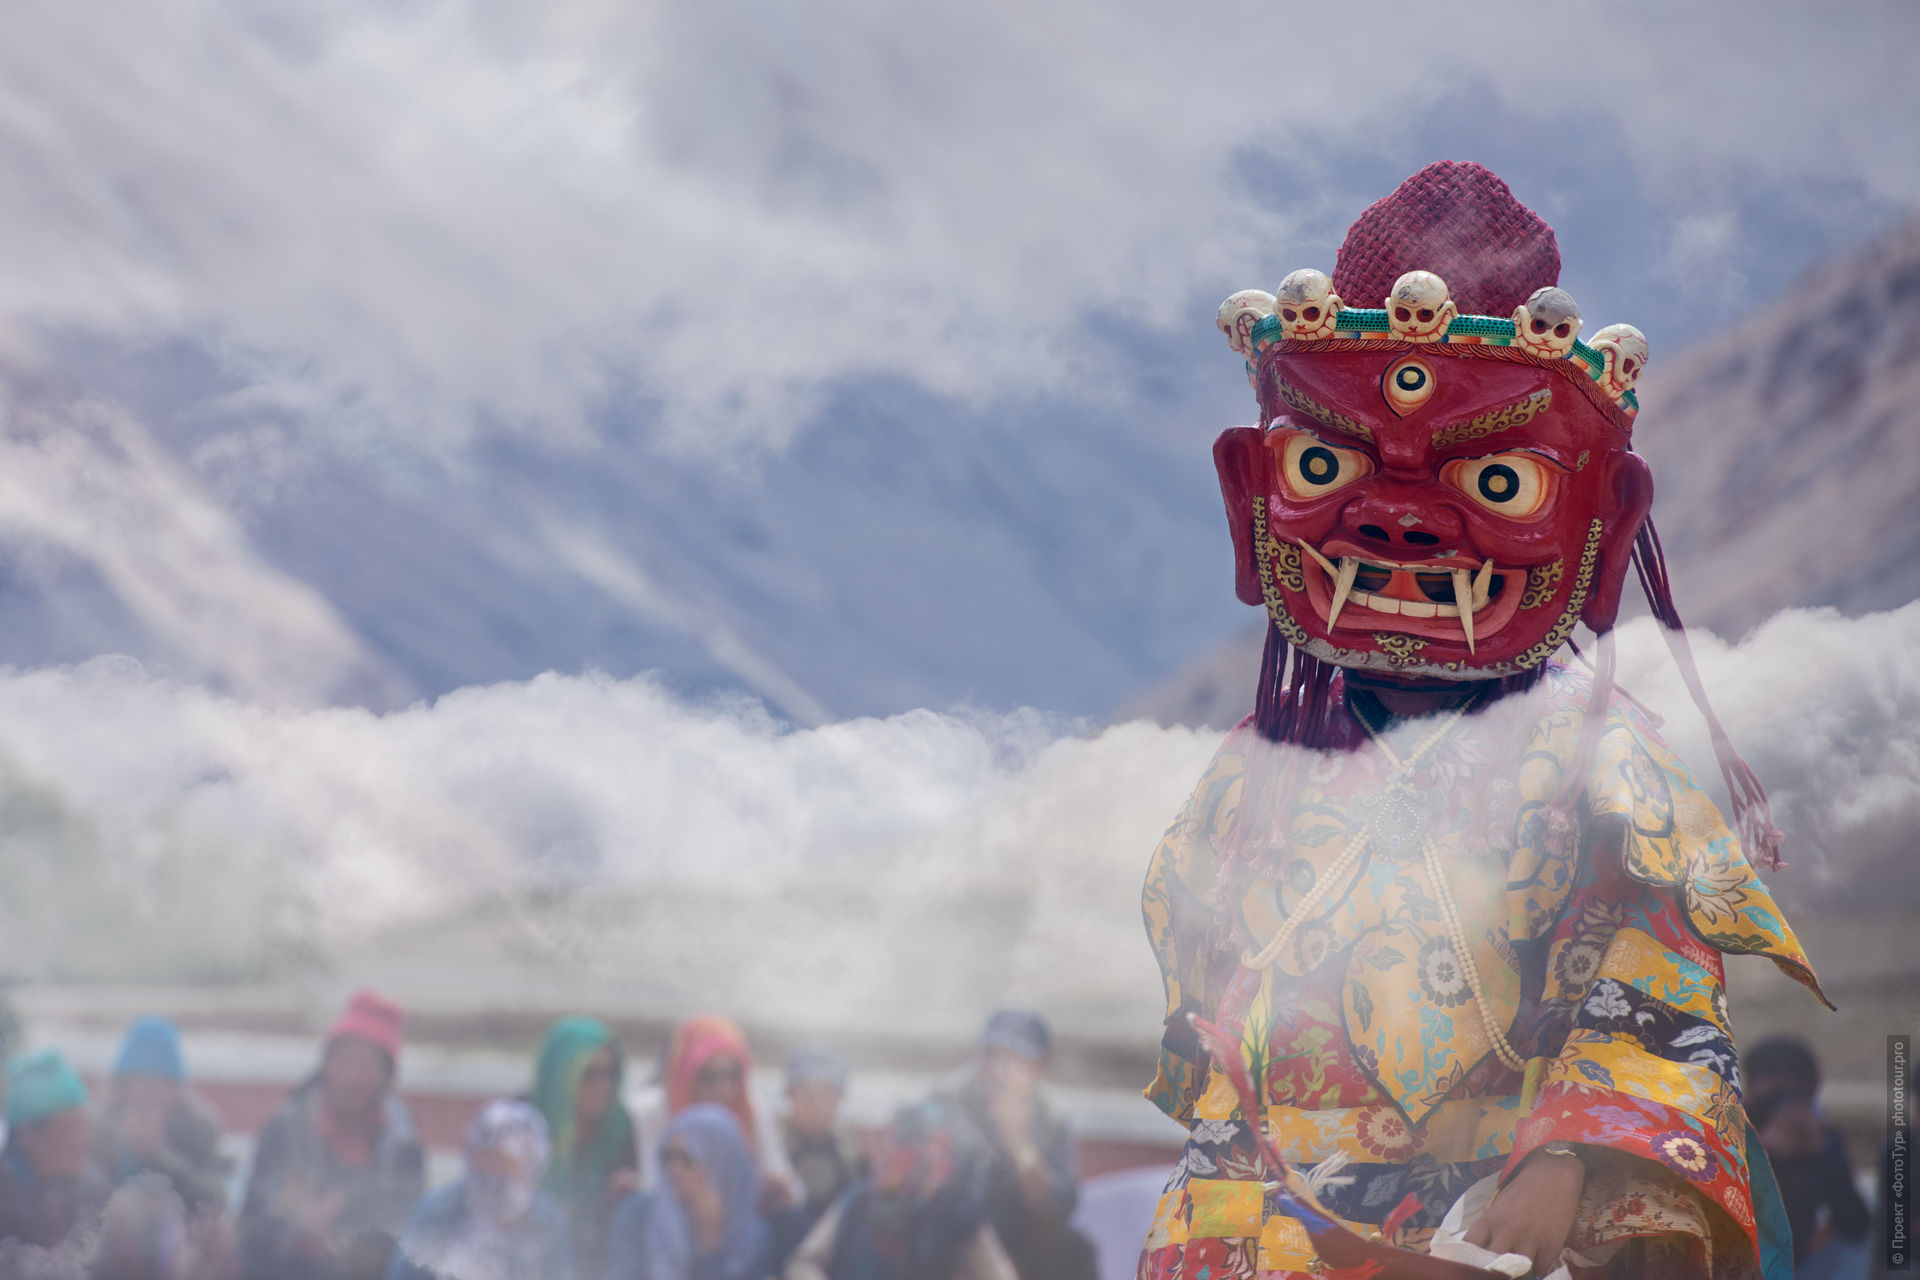 Buddhist Mystery with cham dance performance. Phototour Incredible Himalayas-2: Tsam dance at Tiksei monastery + Tso Moriri lake, Ladakh, Tibet, 11.11.-20.11.2020.